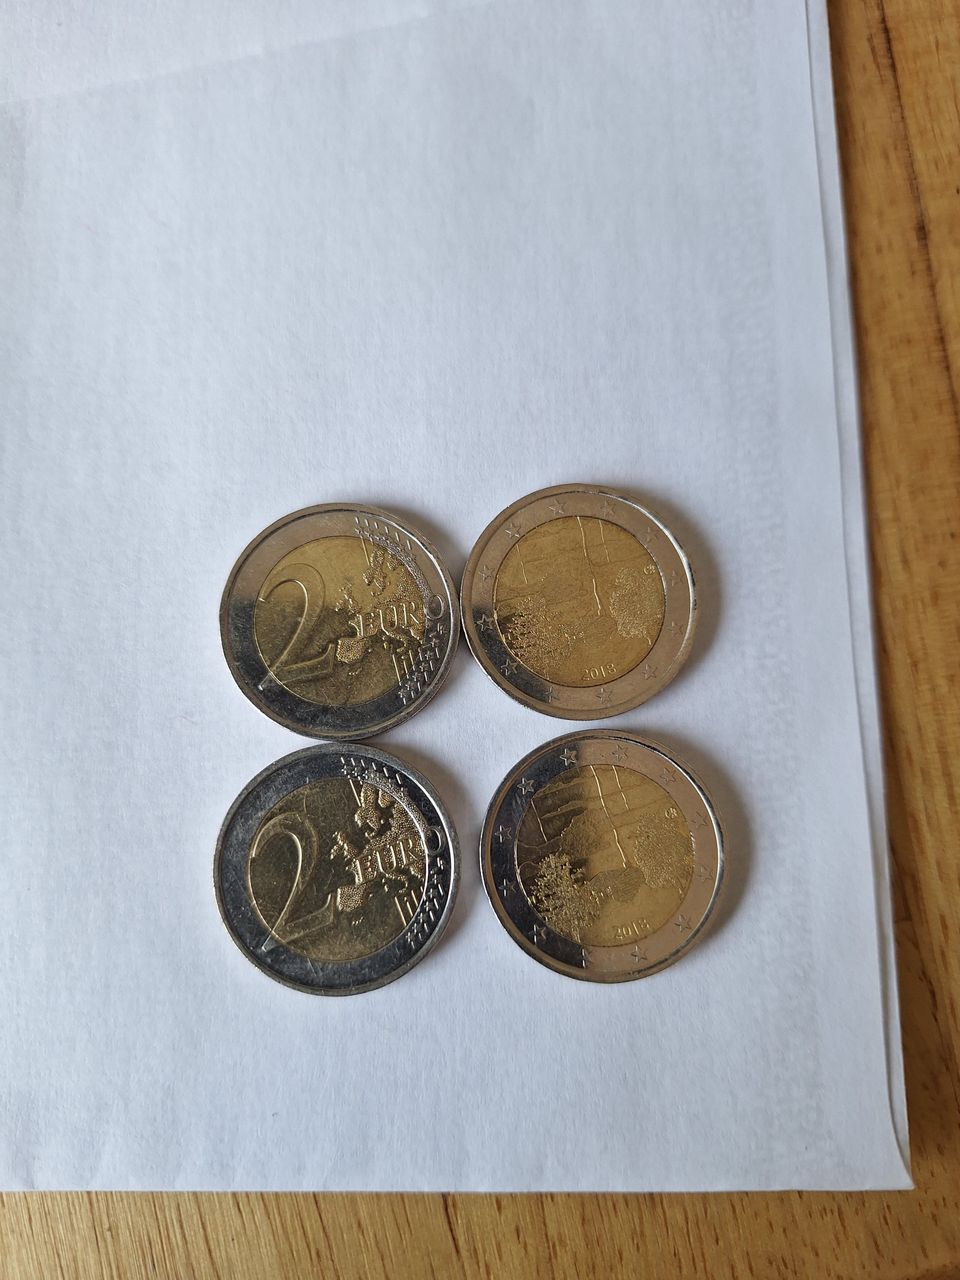 Saunaraha 2018 2 euron kolikko